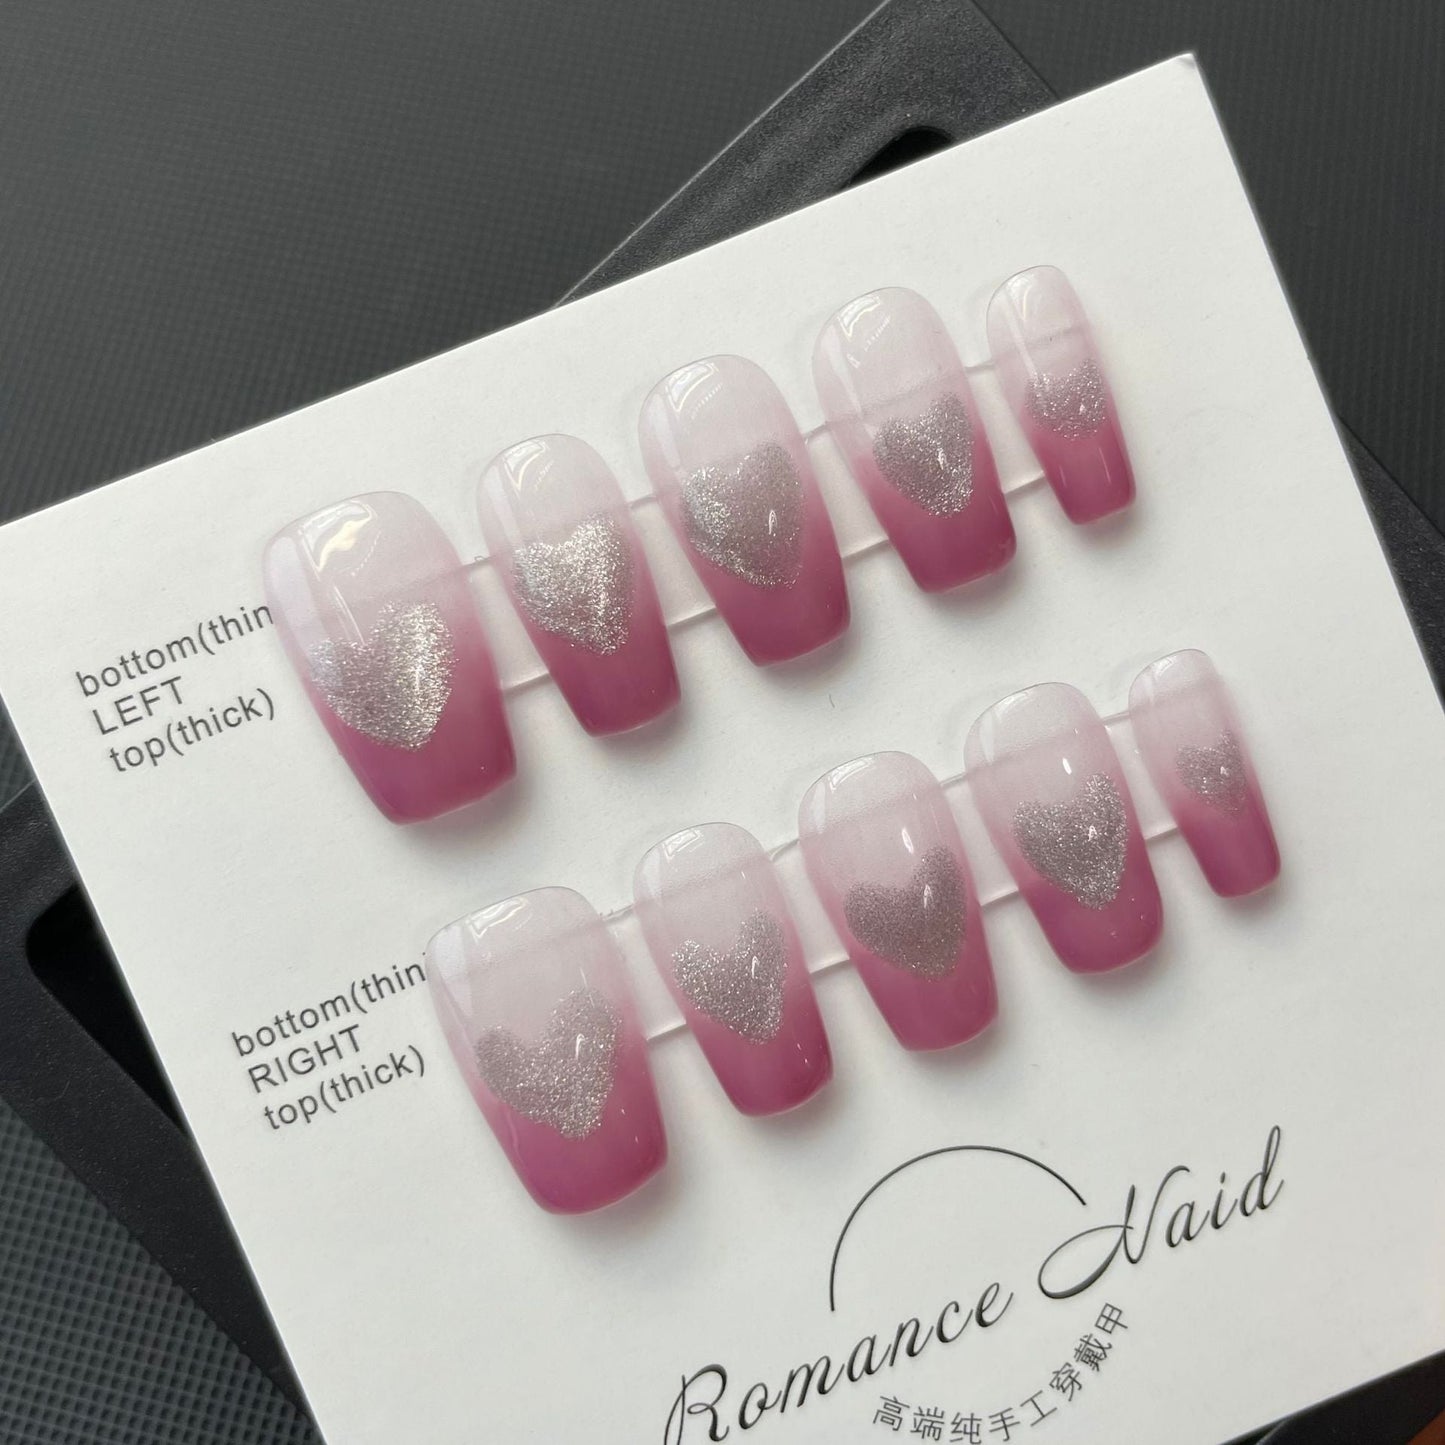 679 Cat's Eye Love style press on nagels 100% handgemaakte kunstnagels nude kleur roze